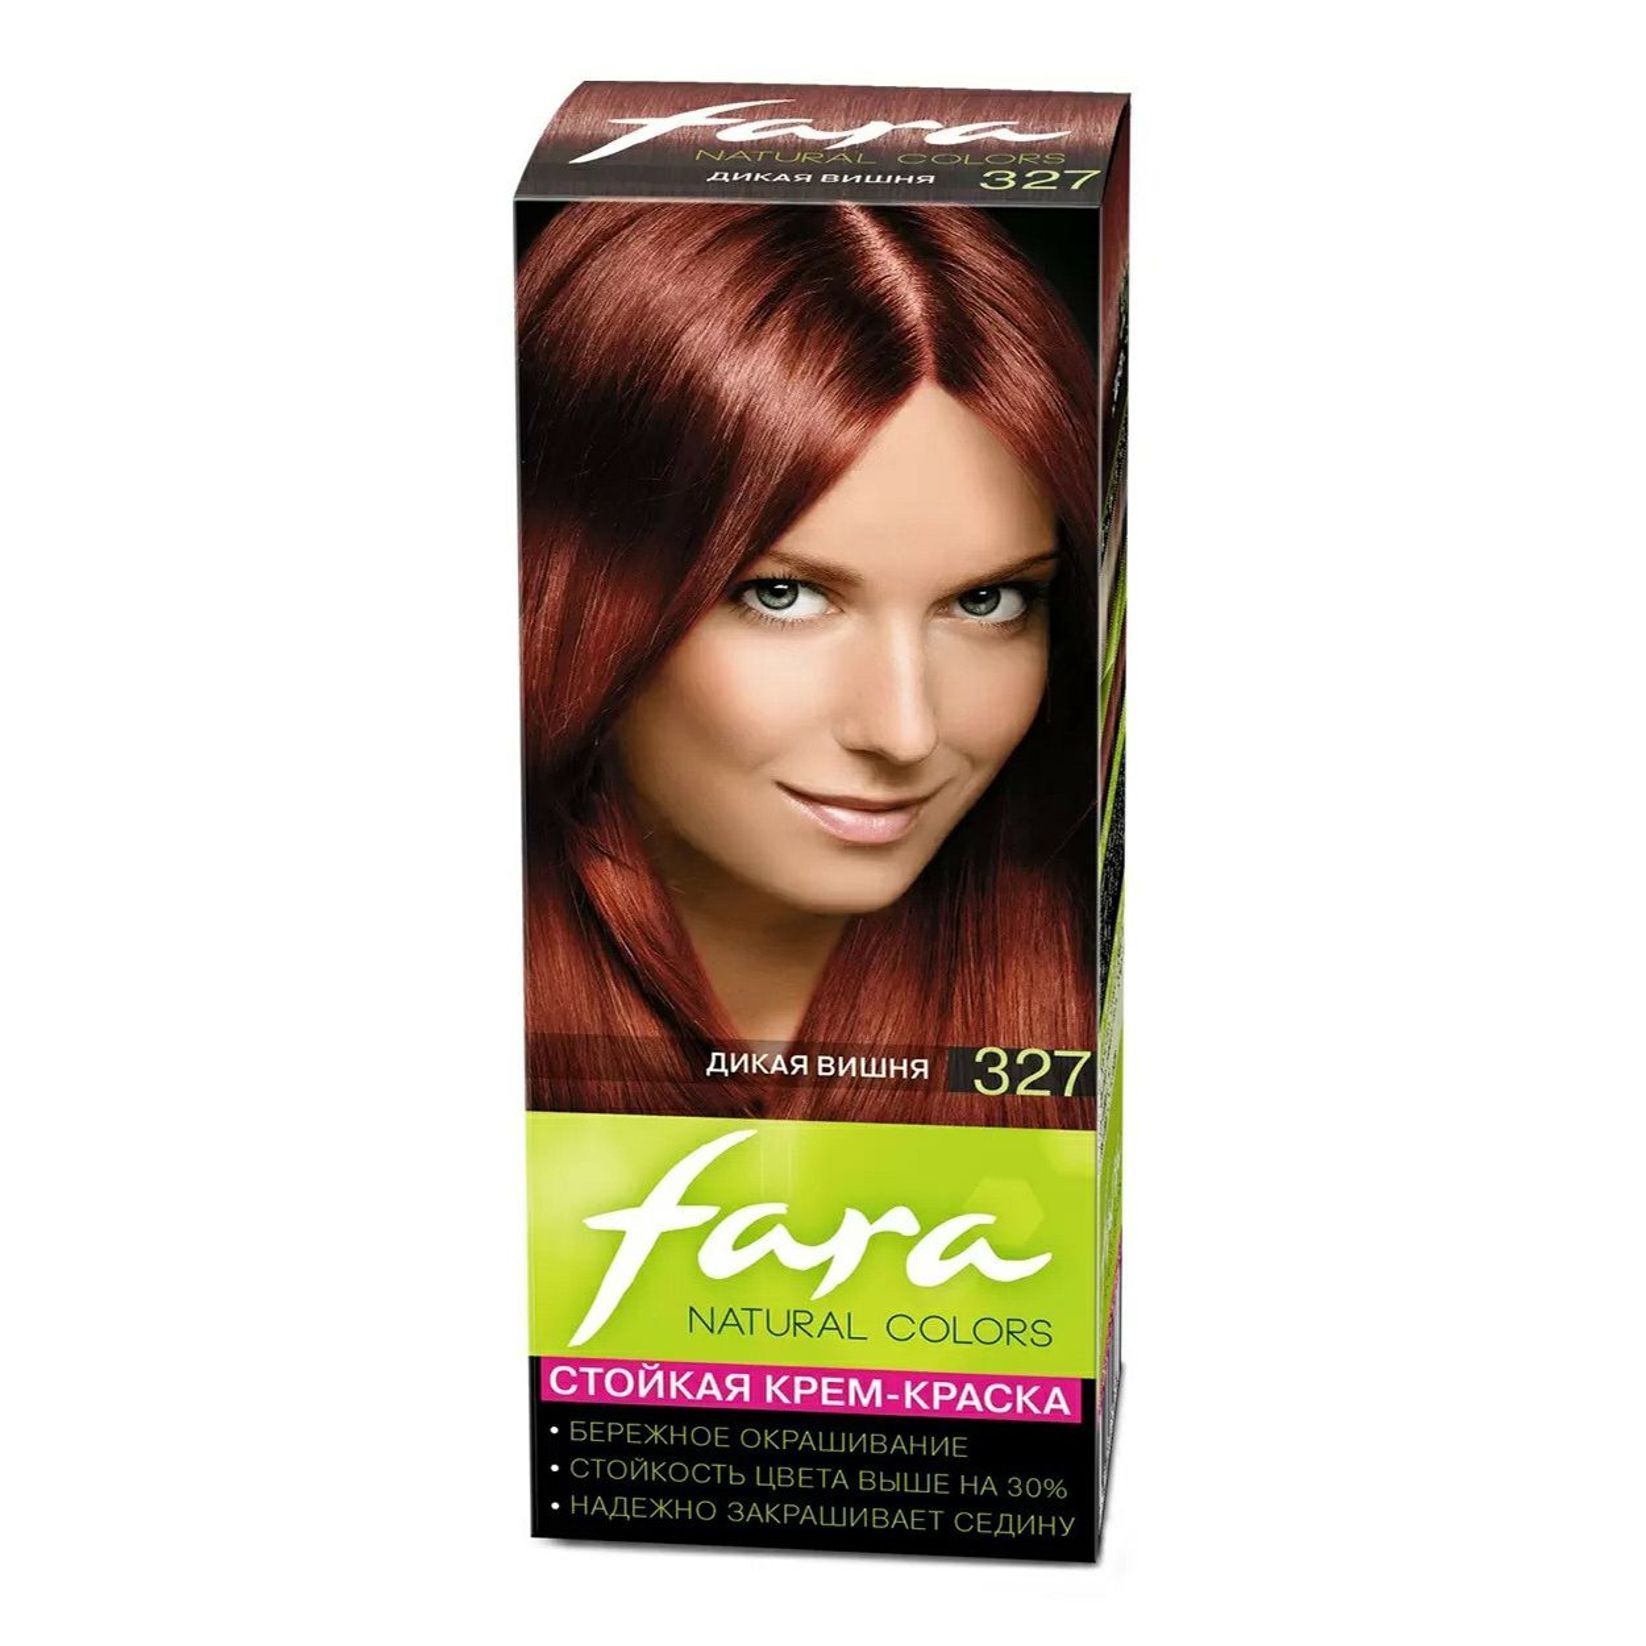 Дикая вишня магазин. Fara natural Colors краска для волос. Краска для волос фара Дикая вишня. 327 Тон Дикая вишня. Дикая вишня краска для волос.